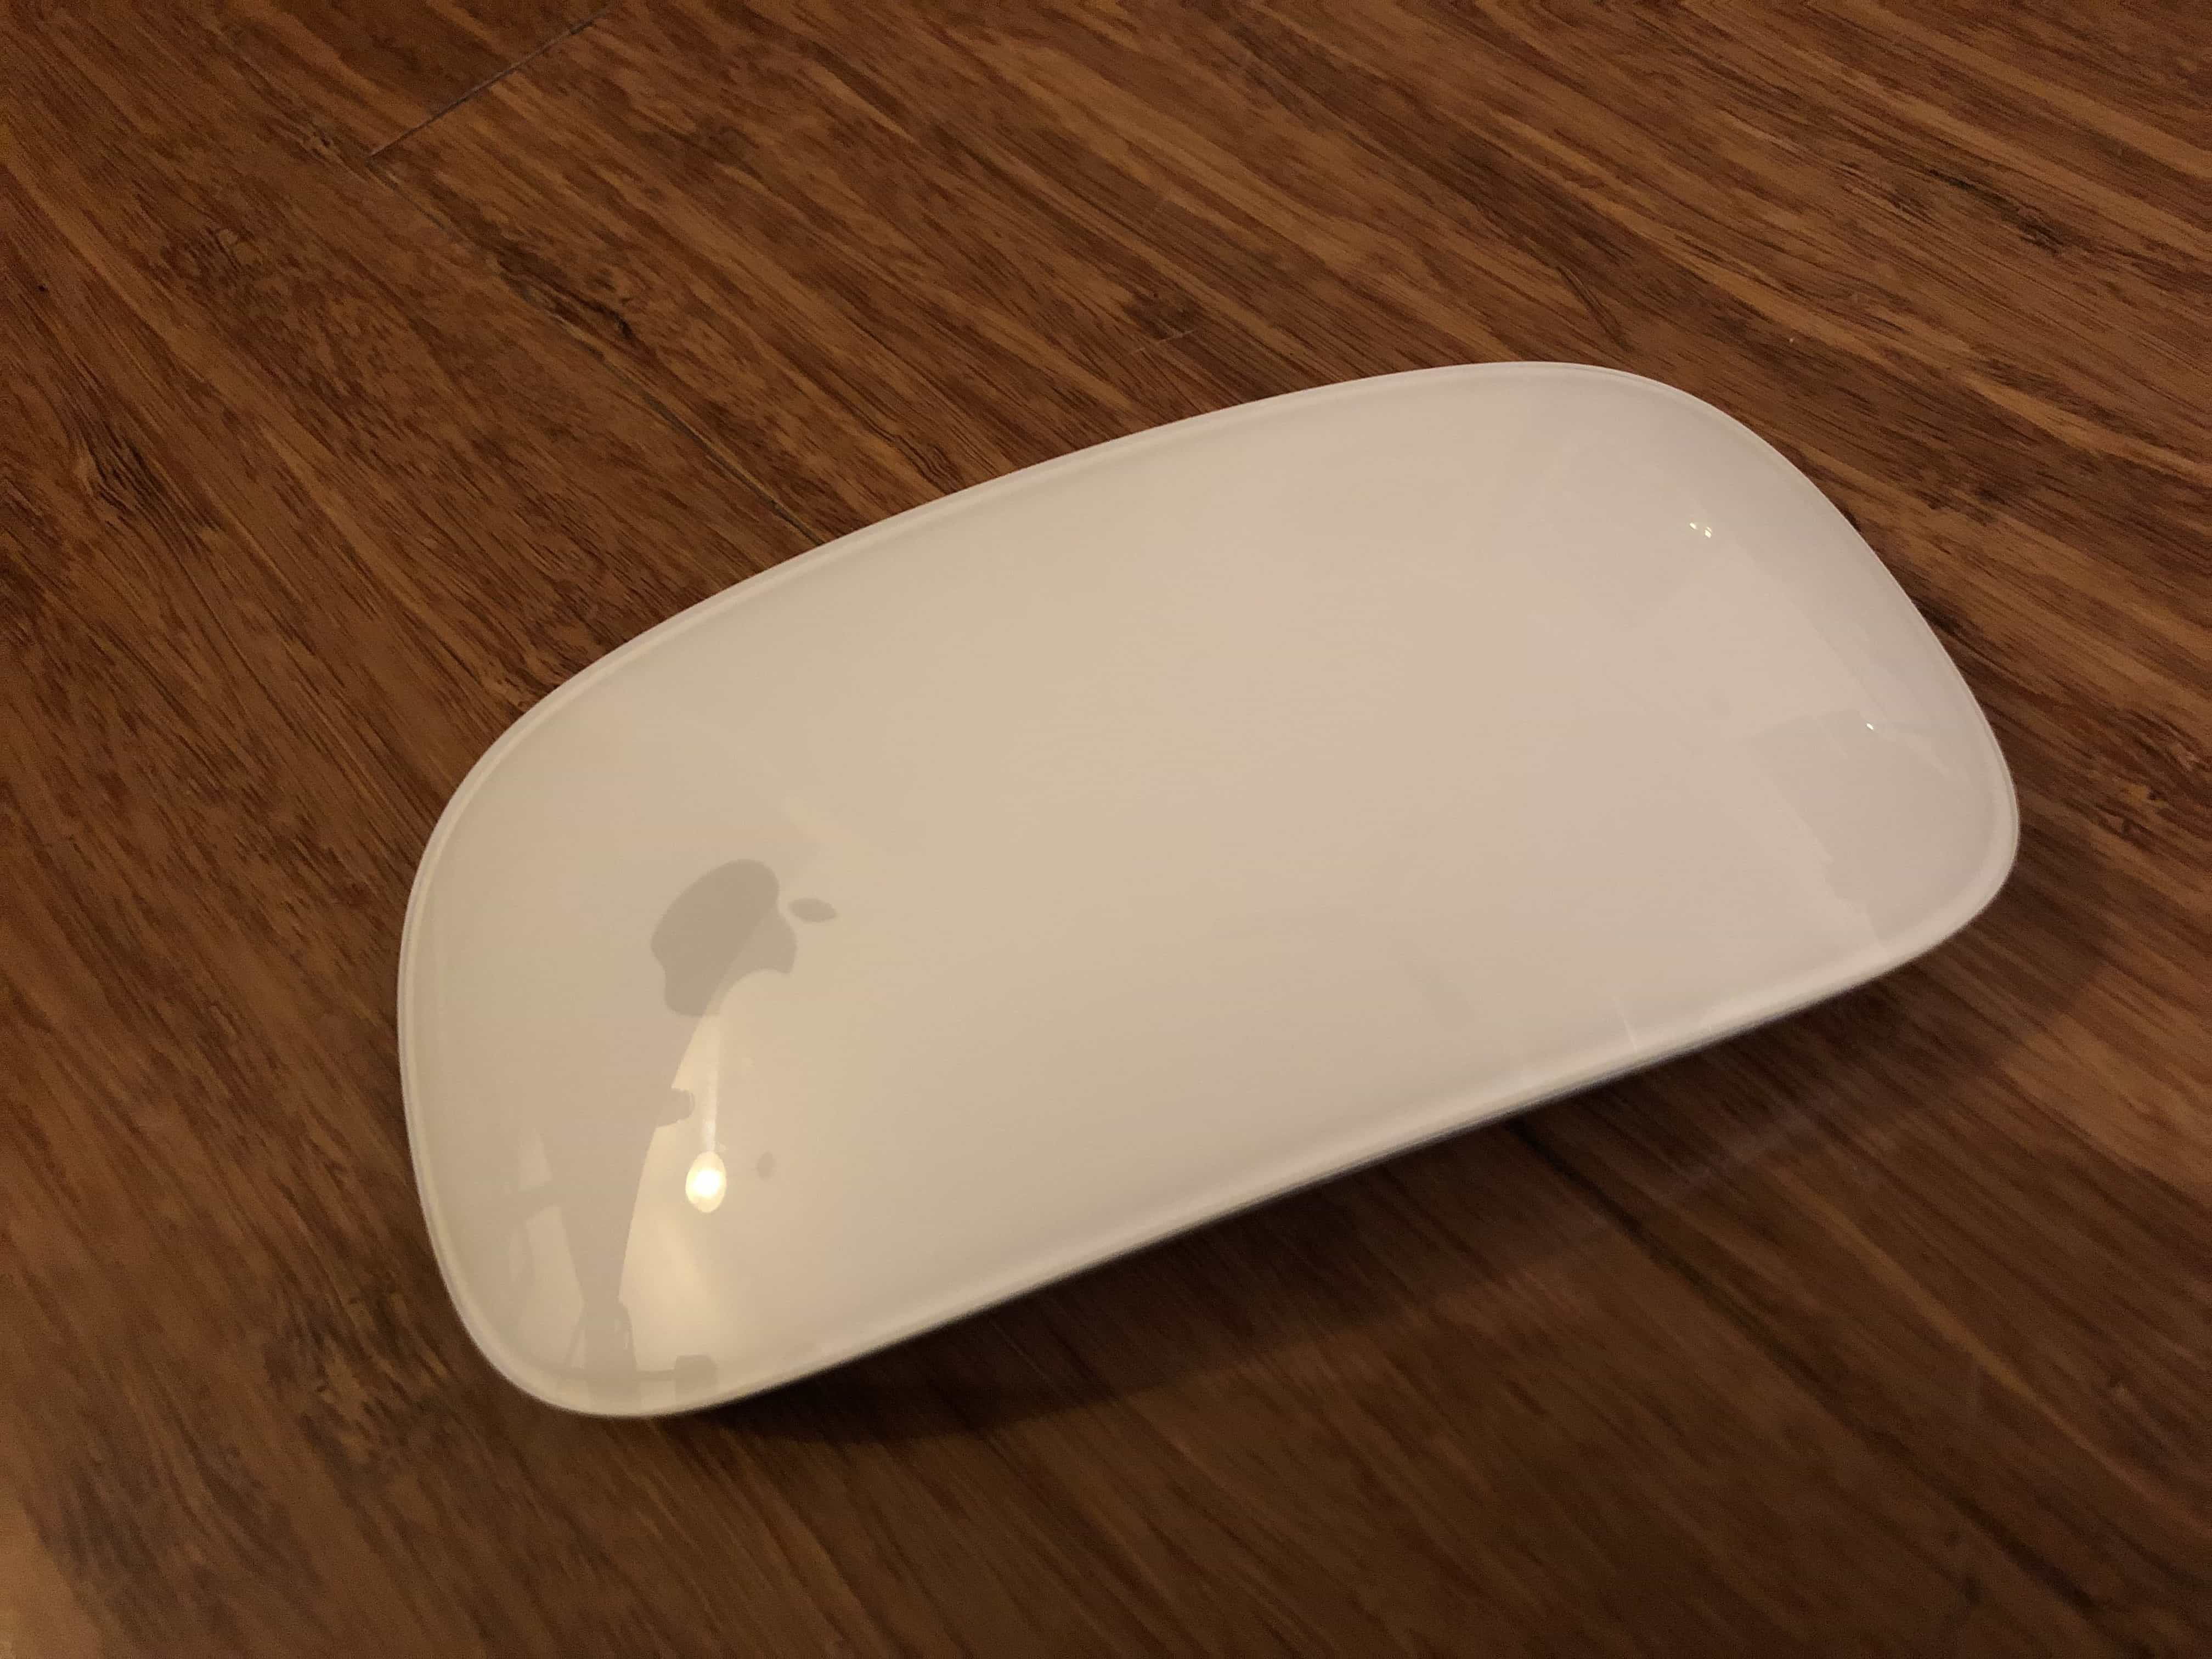 Apple Magic Mouse 2 - MORE LISTINGS